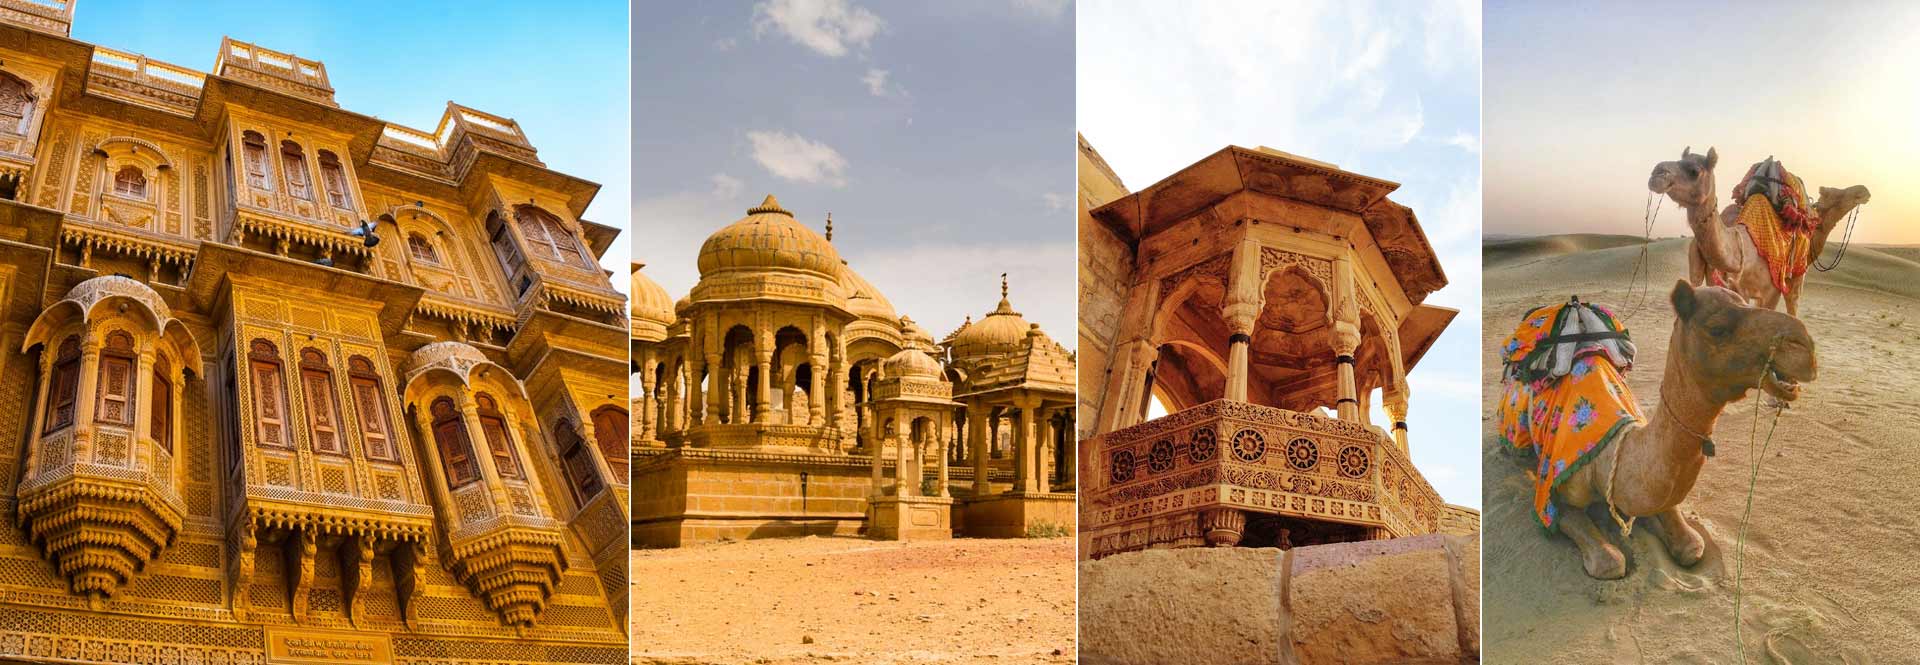 Jaisalmer Fort Tourism